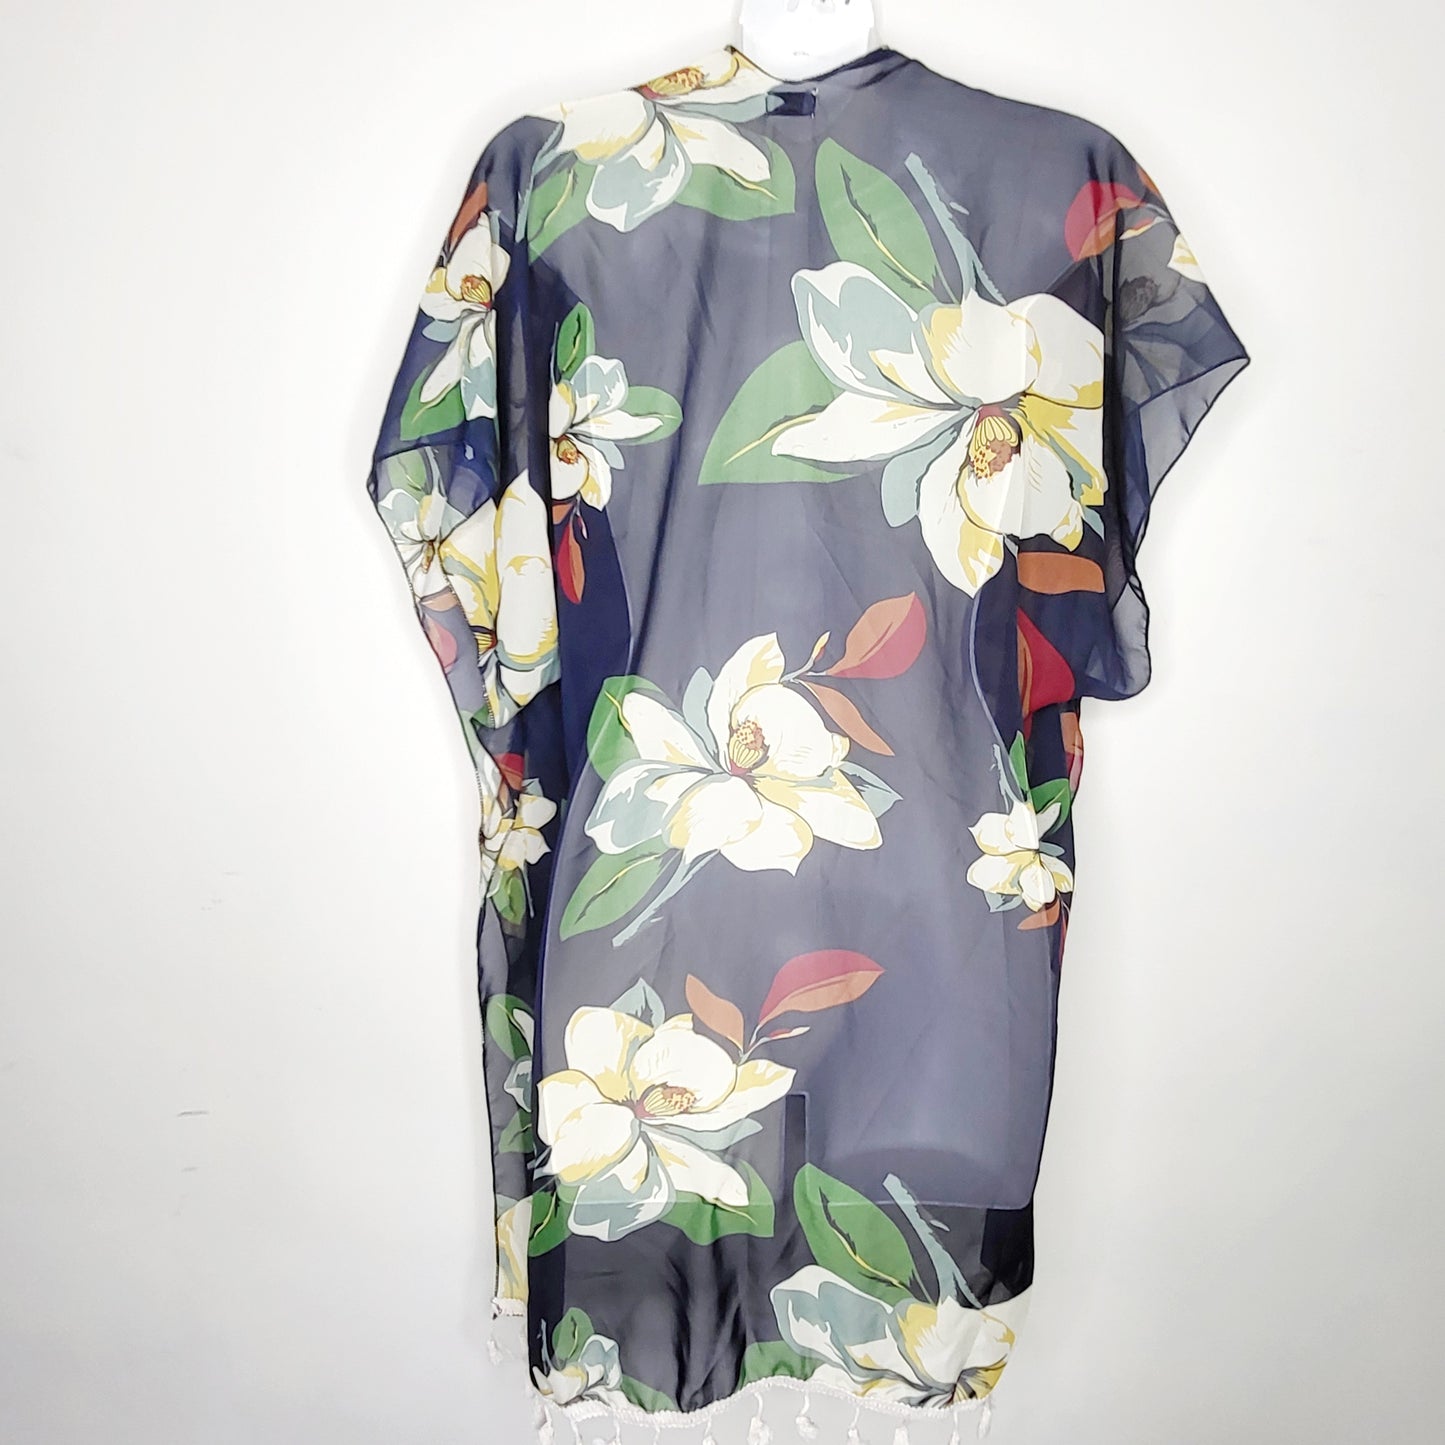 RVOS2 - Kismet navy floral kimono top, one size fits all